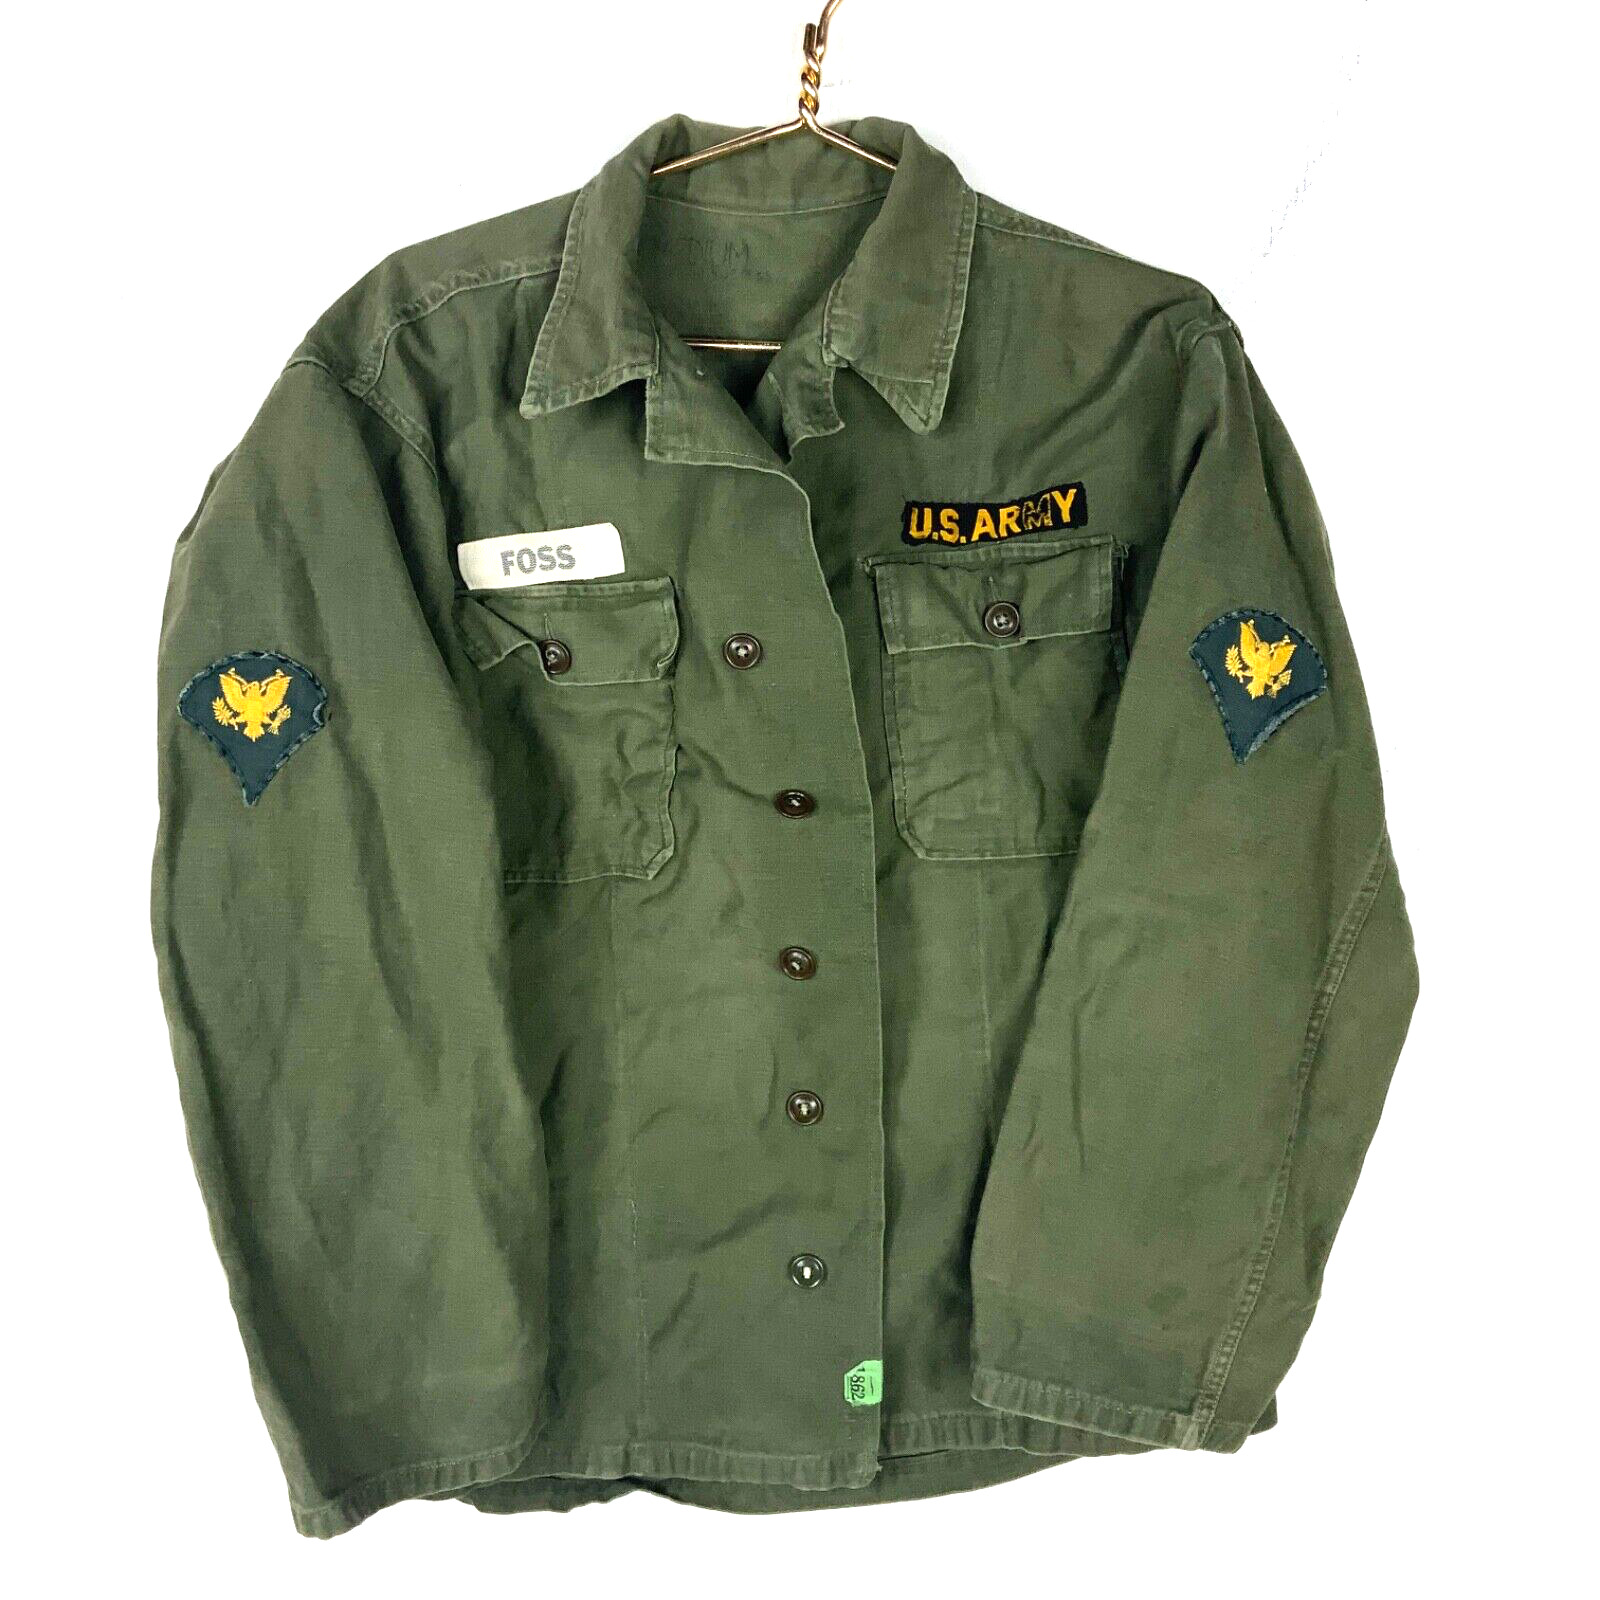 Vintage Military US Army Shirt Size Medium Green Vietnam Era 60s 70s